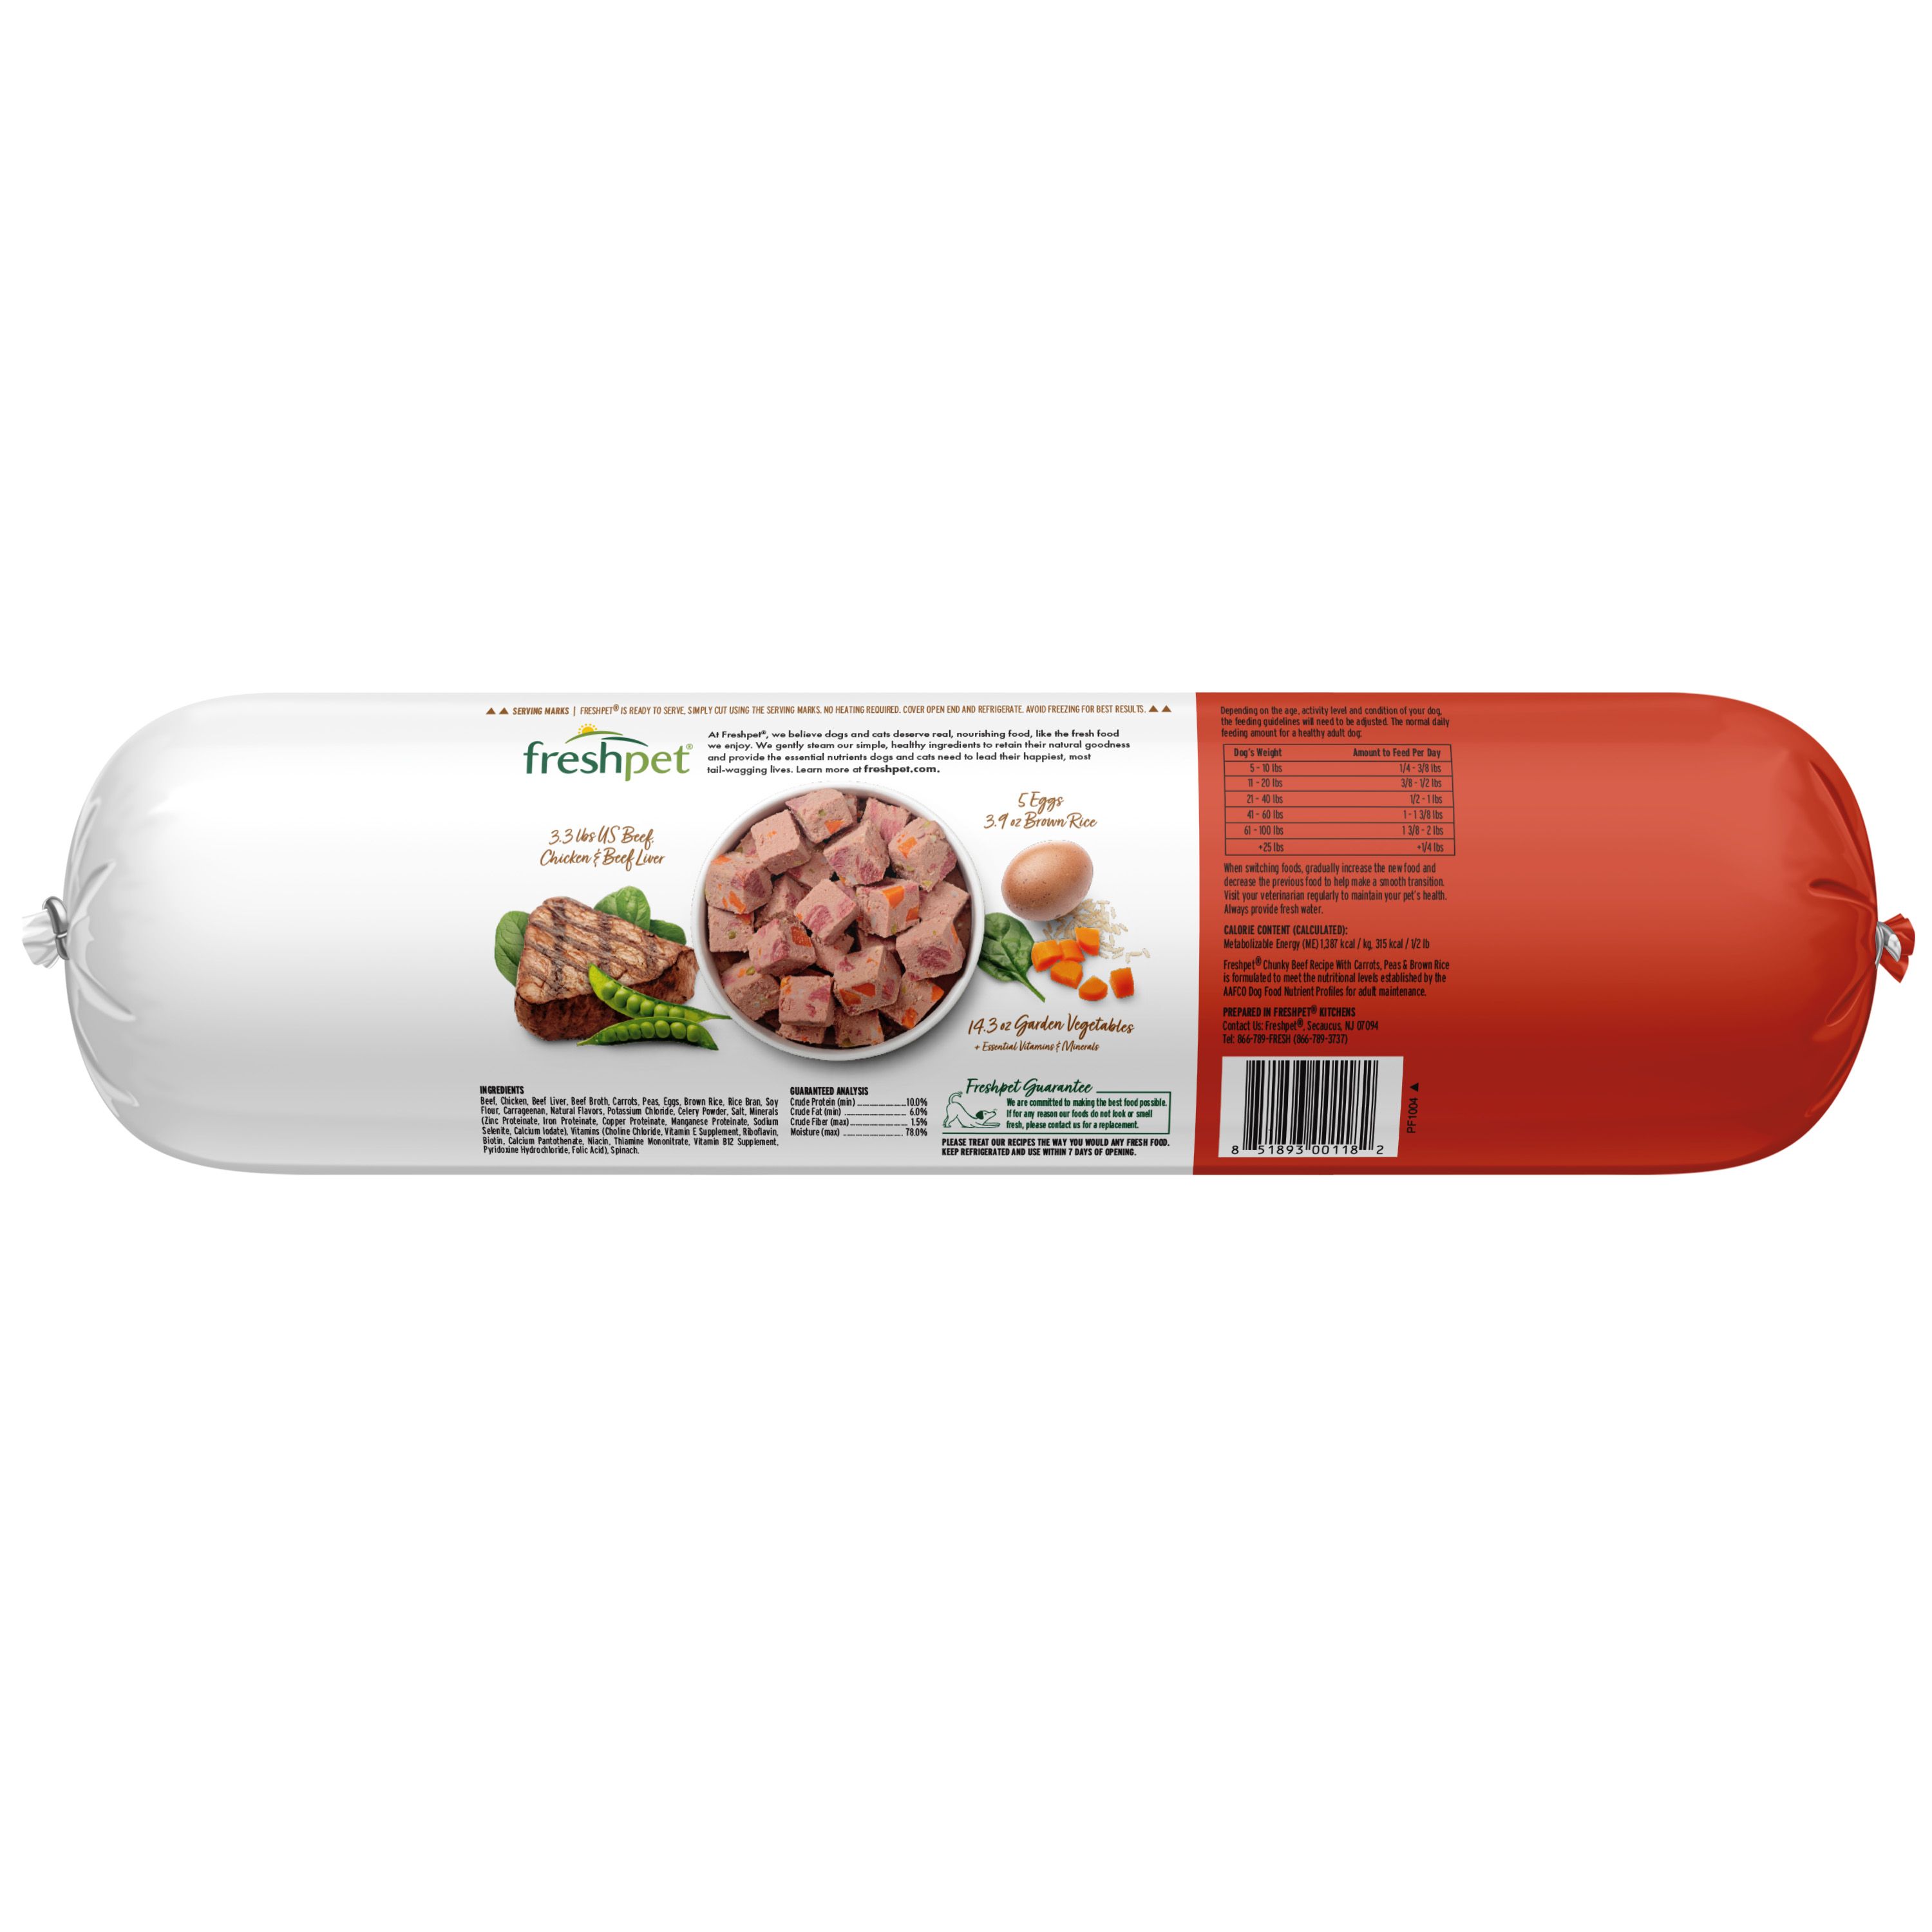 Freshpet Healthy & Natural Dog Food, Fresh Beef Roll, 6lb - image 2 of 6